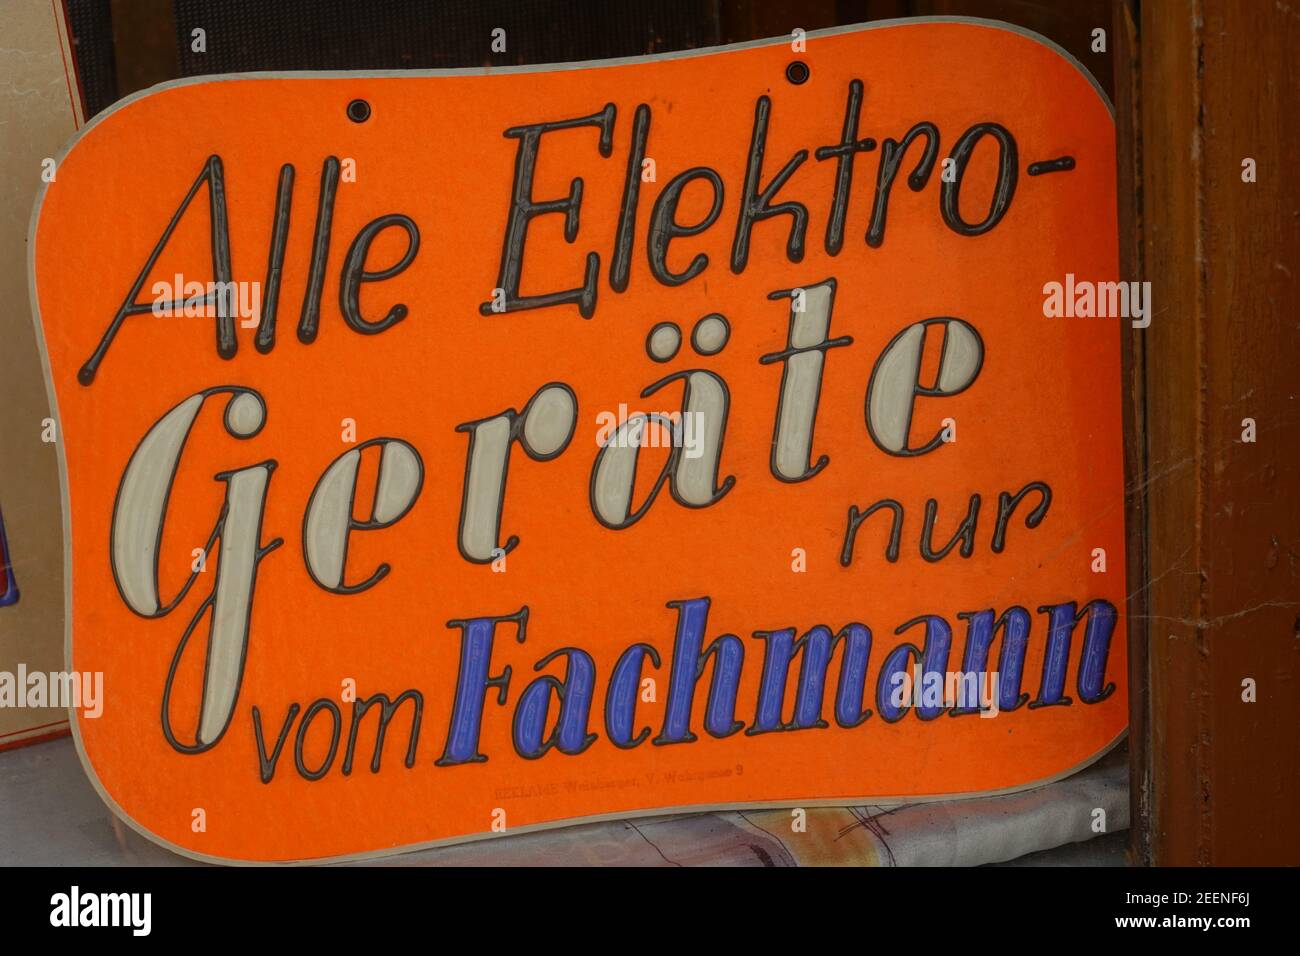 Wien, Elektrogeräte, altes Werbeschild Banque D'Images